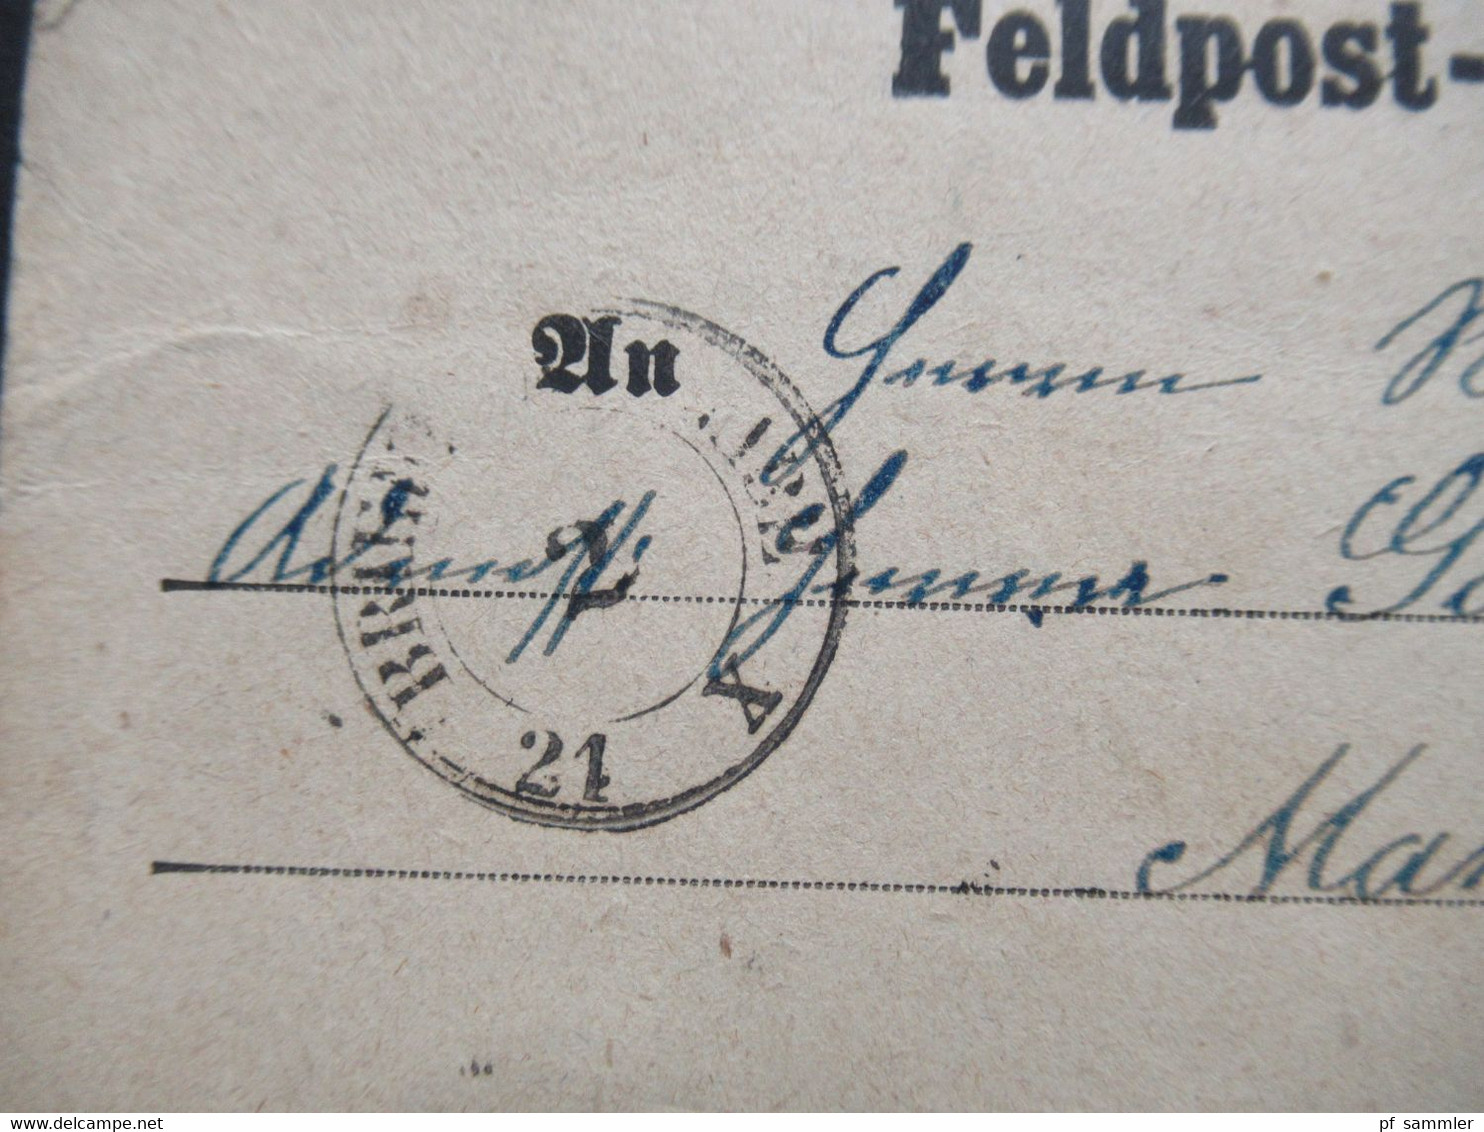 Feldpost Deutsch Französischer Krieg 16.10.1870 Stempel Feld - Post Exped. 24. Inf. Div. Siege De Paris / Montfermeil - War 1870